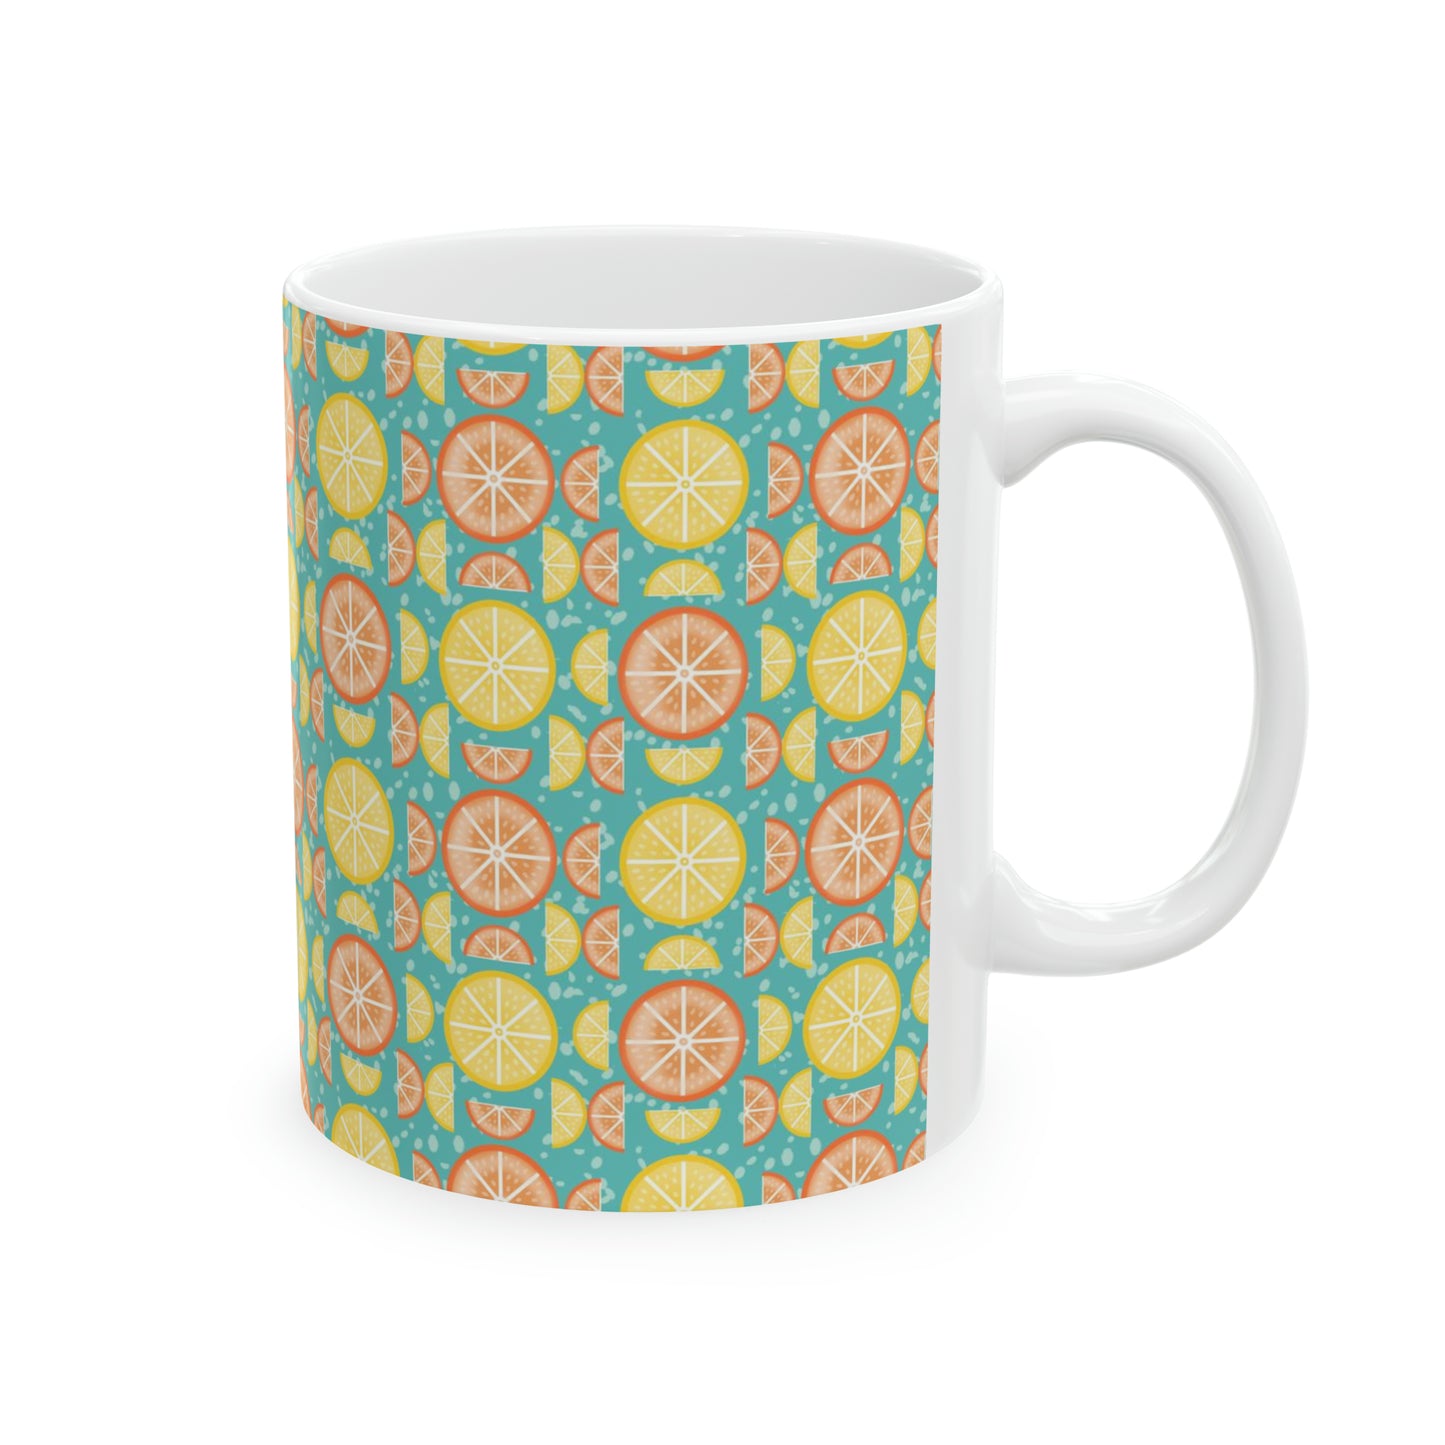 Citrus Slices Geometric Design Ceramic Mug - Vibrant Turquoise Background with Orange and Lemon Slices